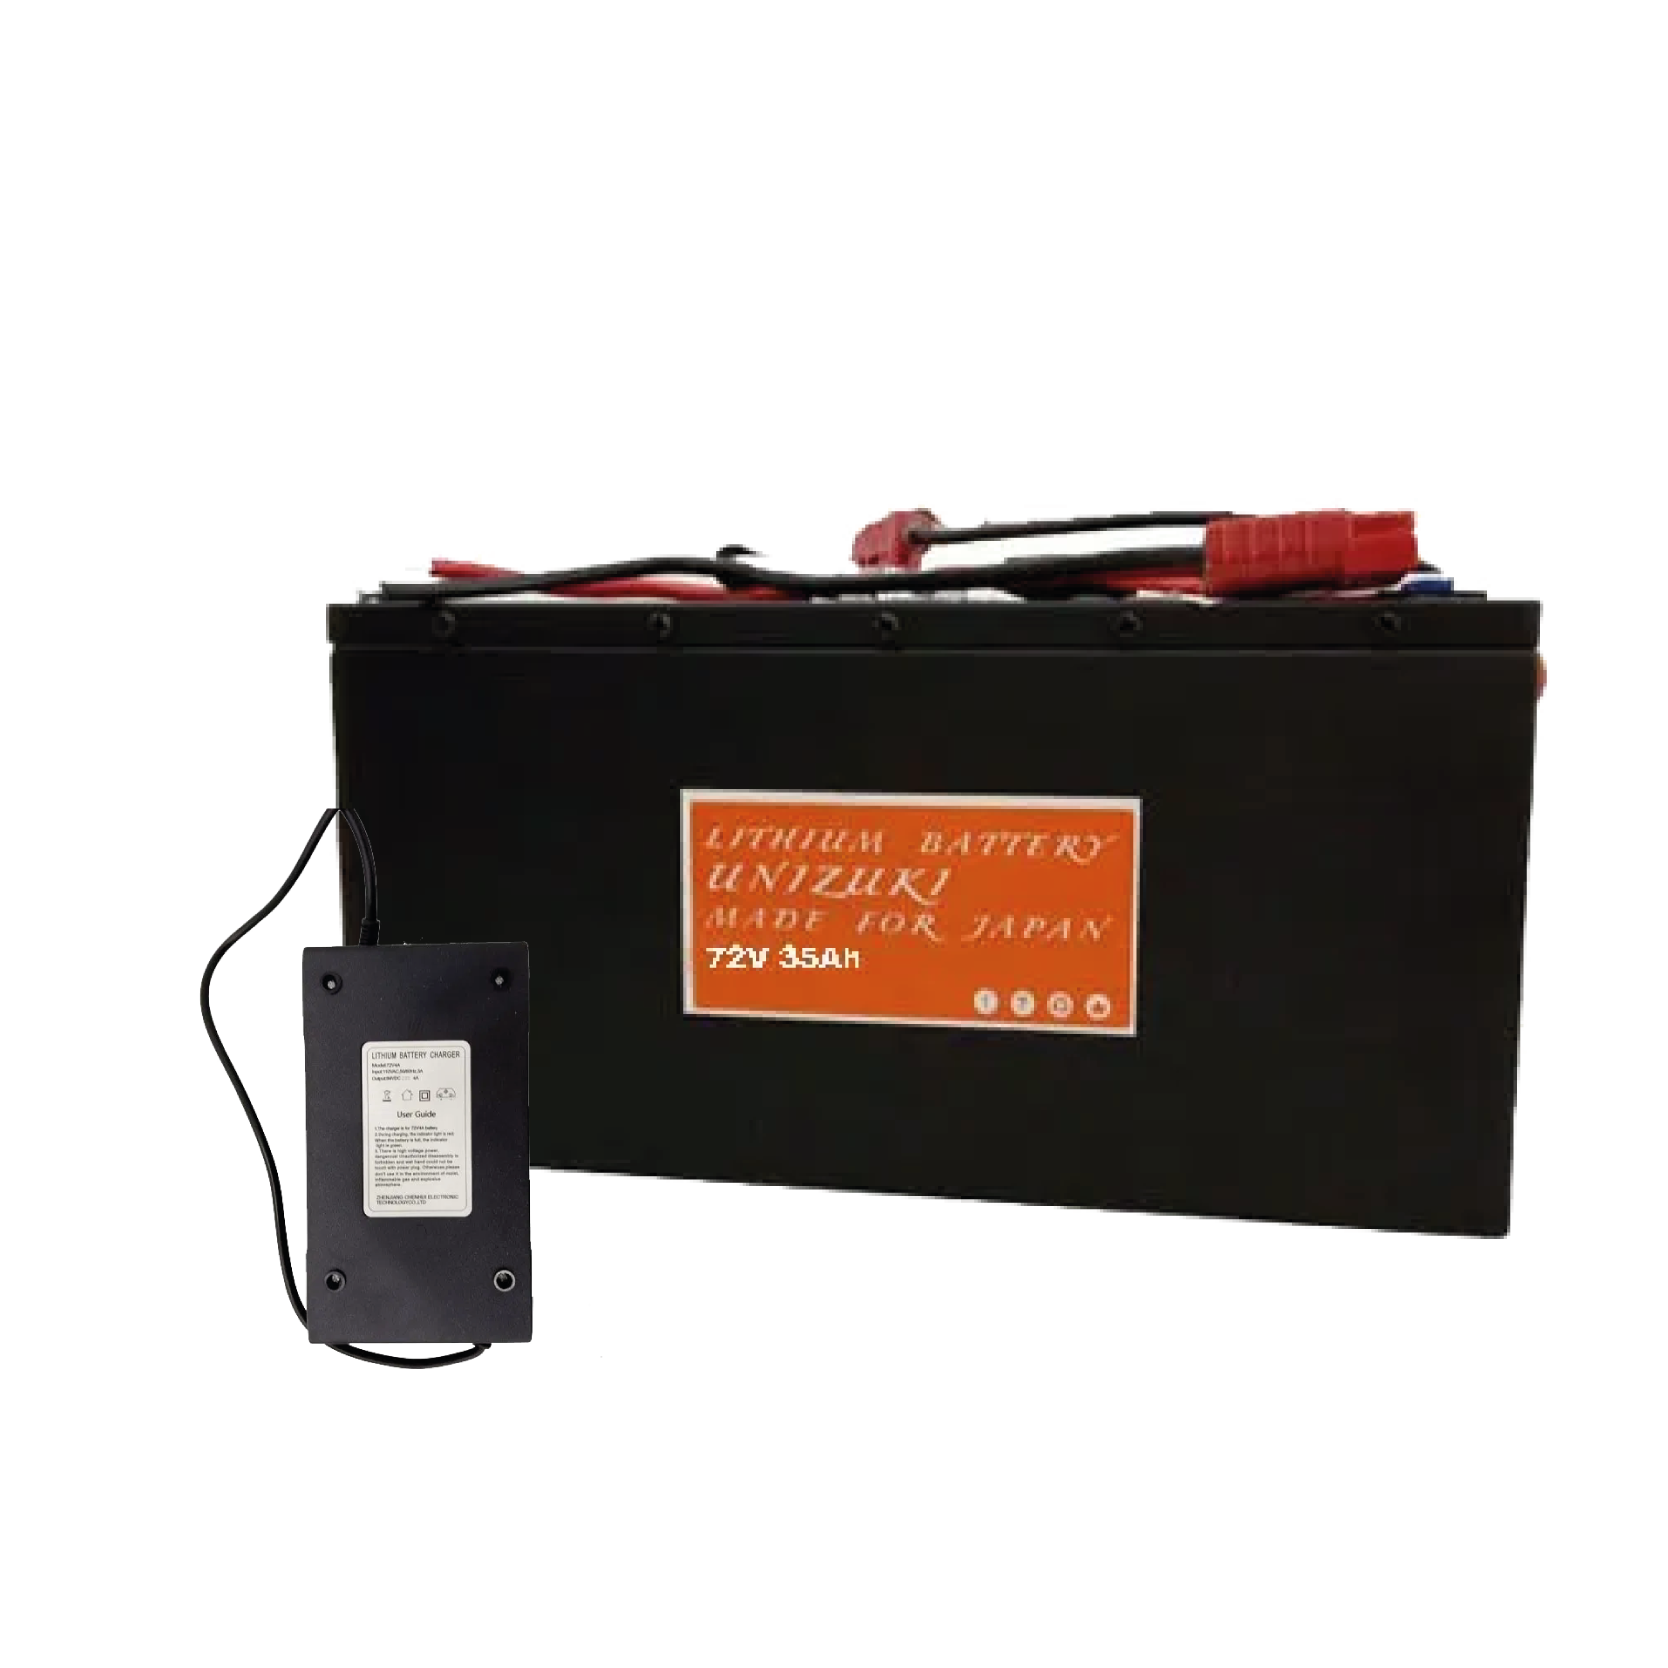 Unizuki Bateria de Litio de Moto Eléctrica 72/35 con